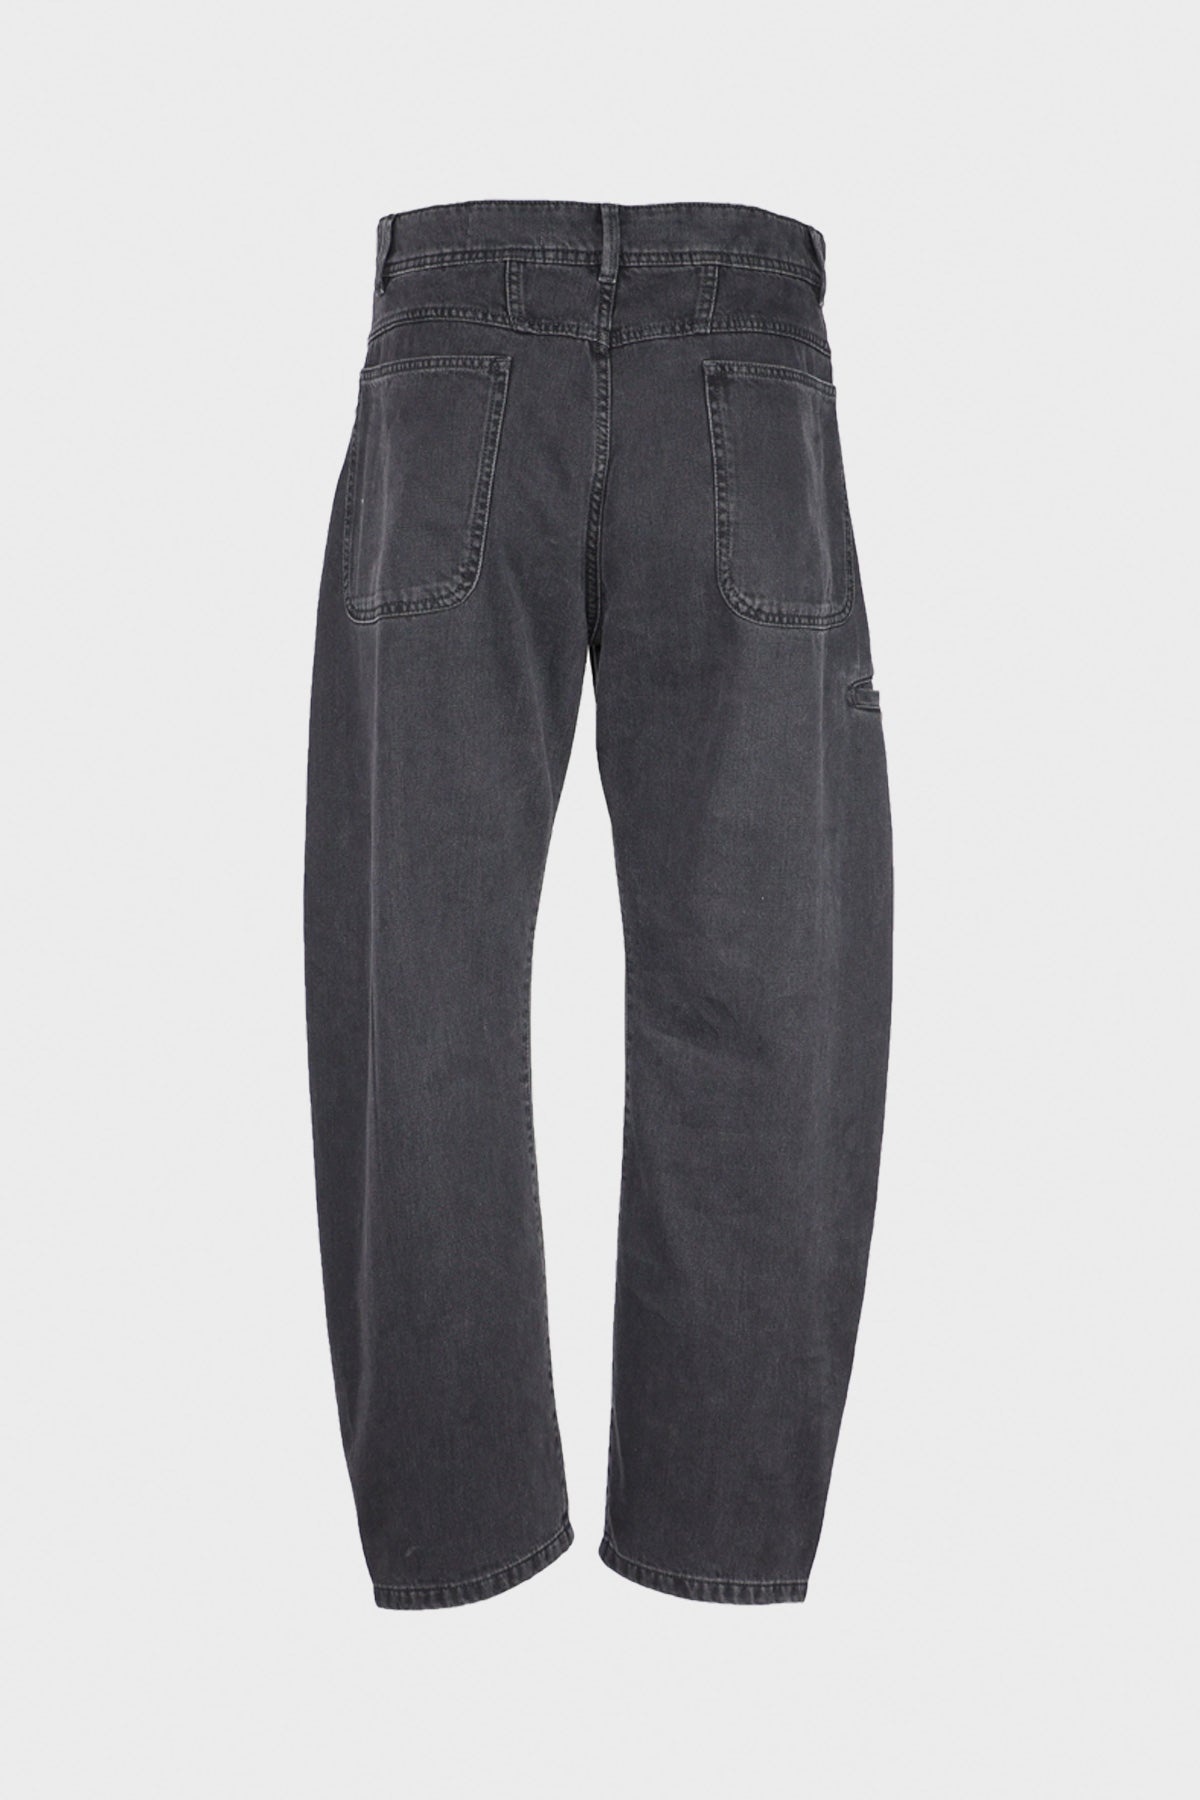 Twisted Workwear Pants - Denim Soft Bleached Black - 3